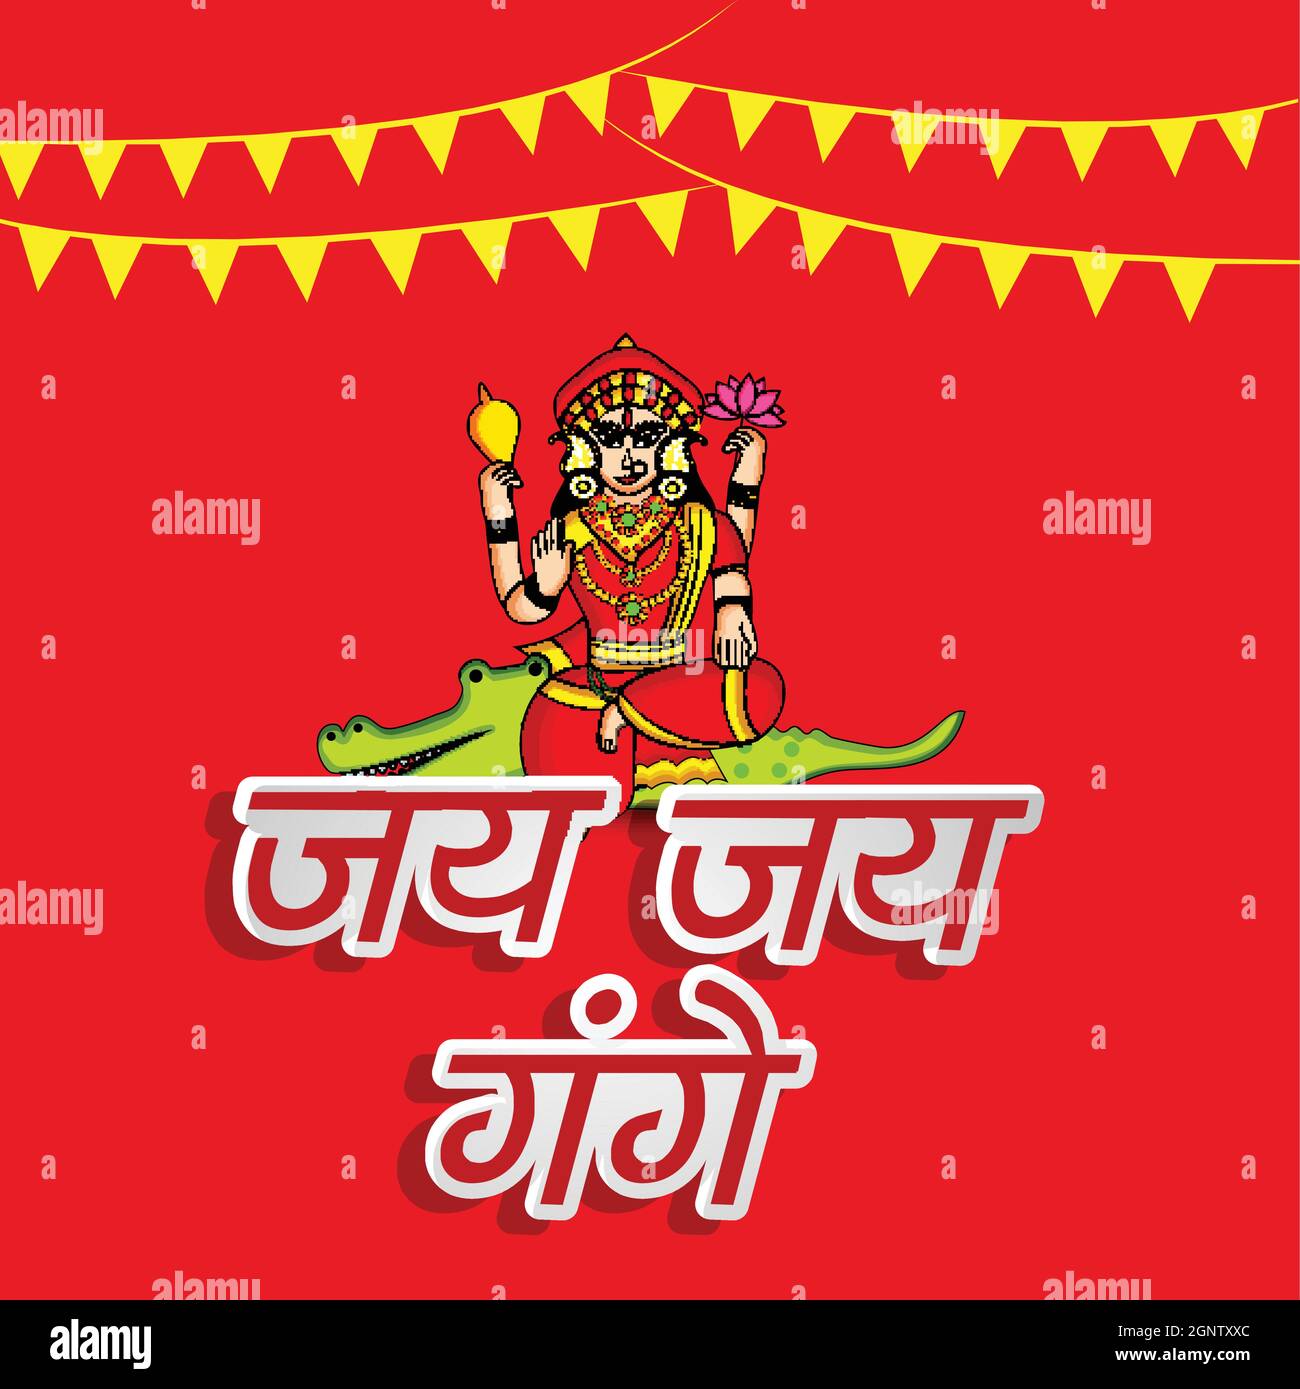 Ganga Dussehra Hindu Festival Hintergrund Stock Vektor